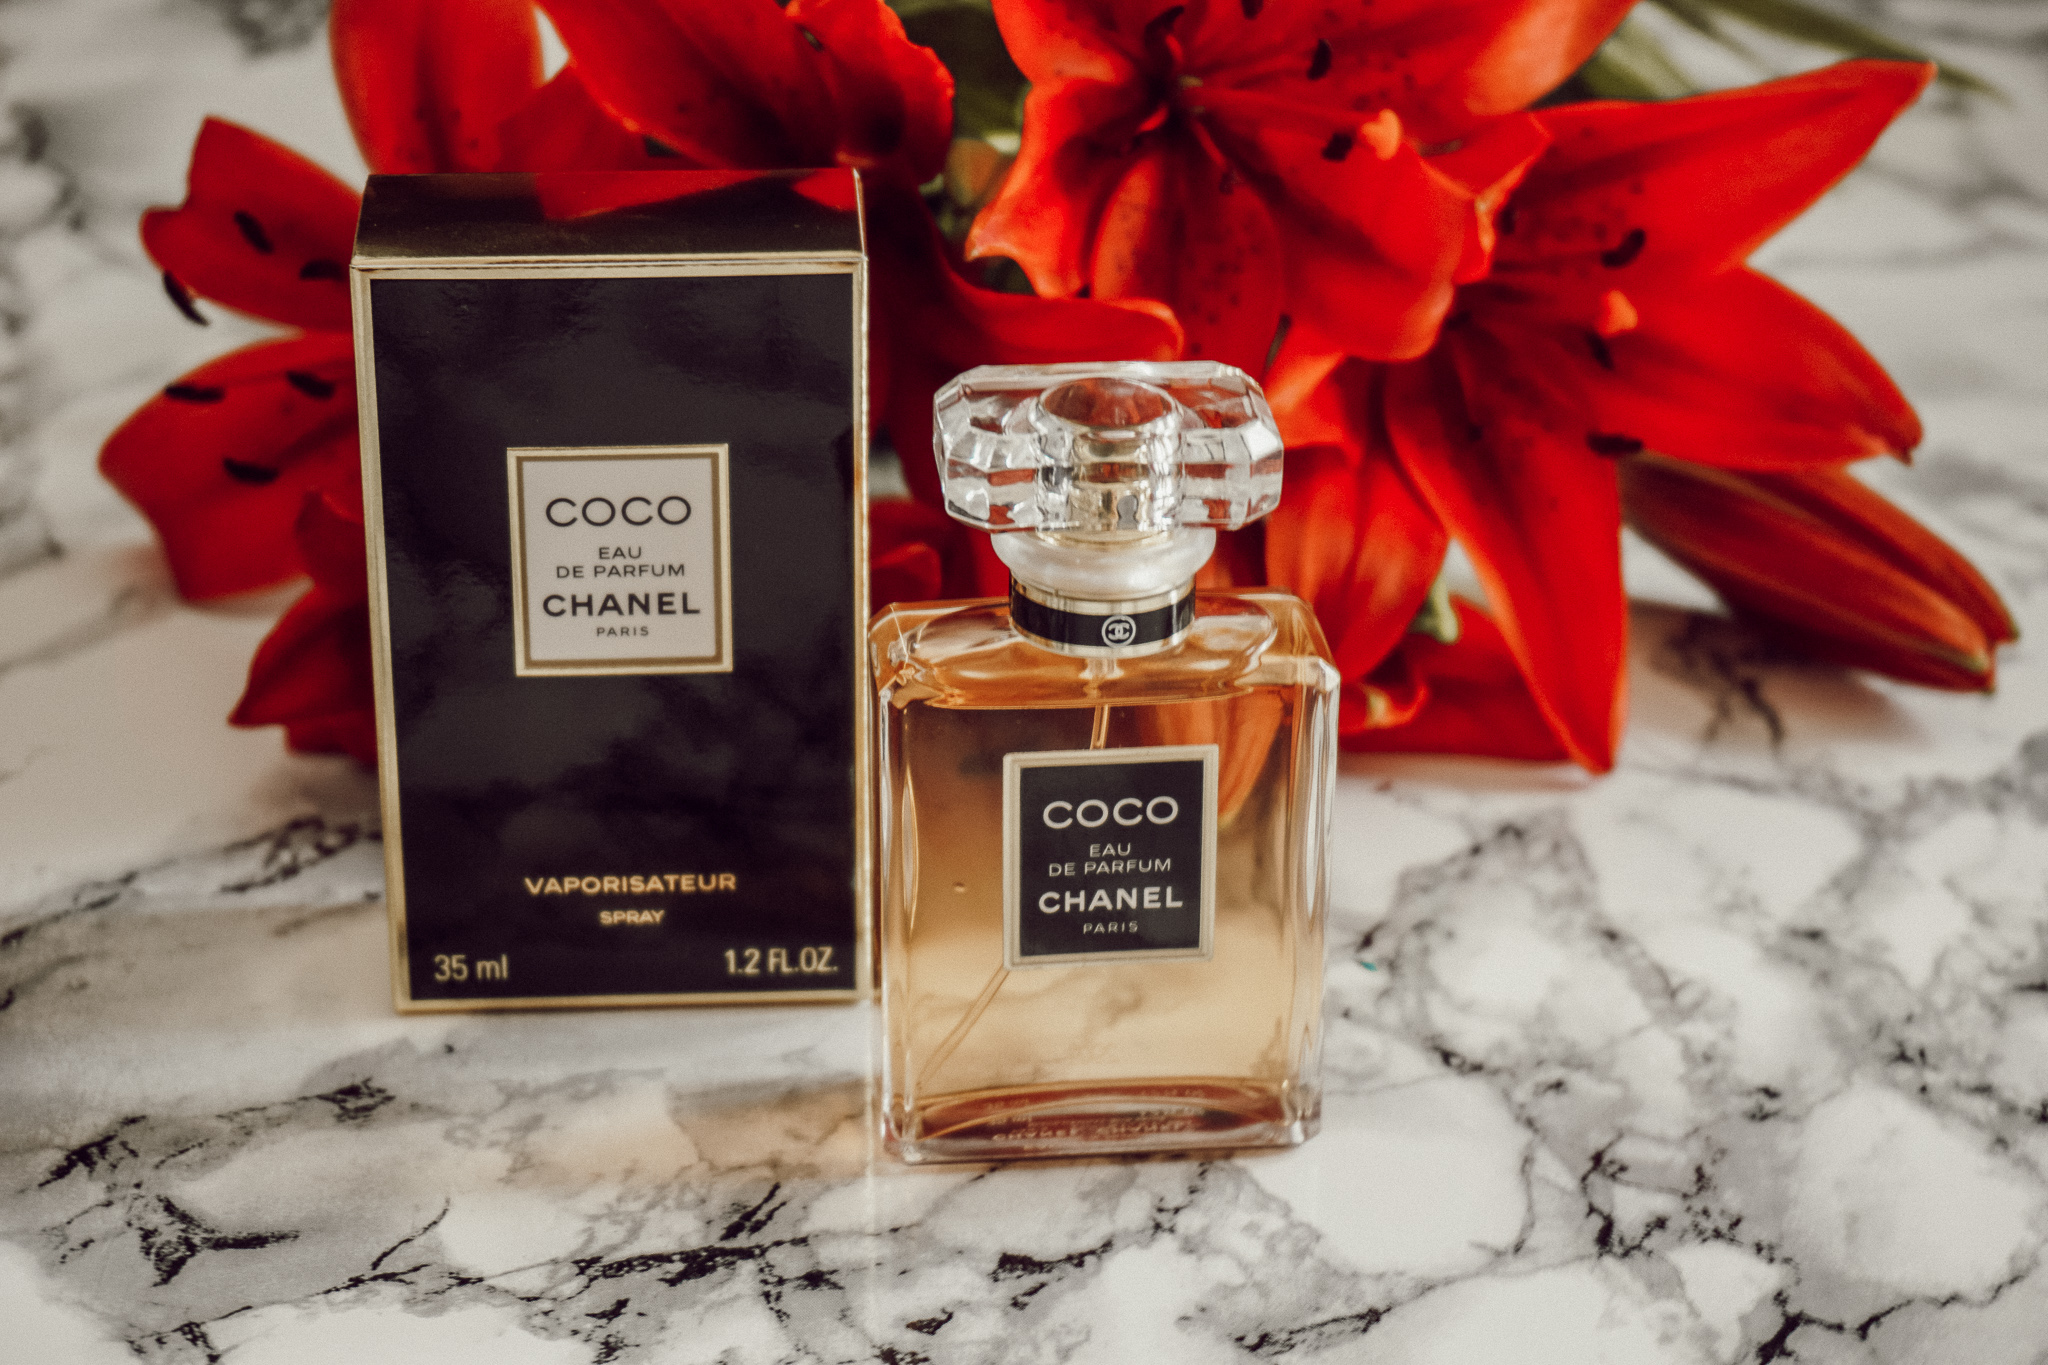 Coco eau de parfum chanel